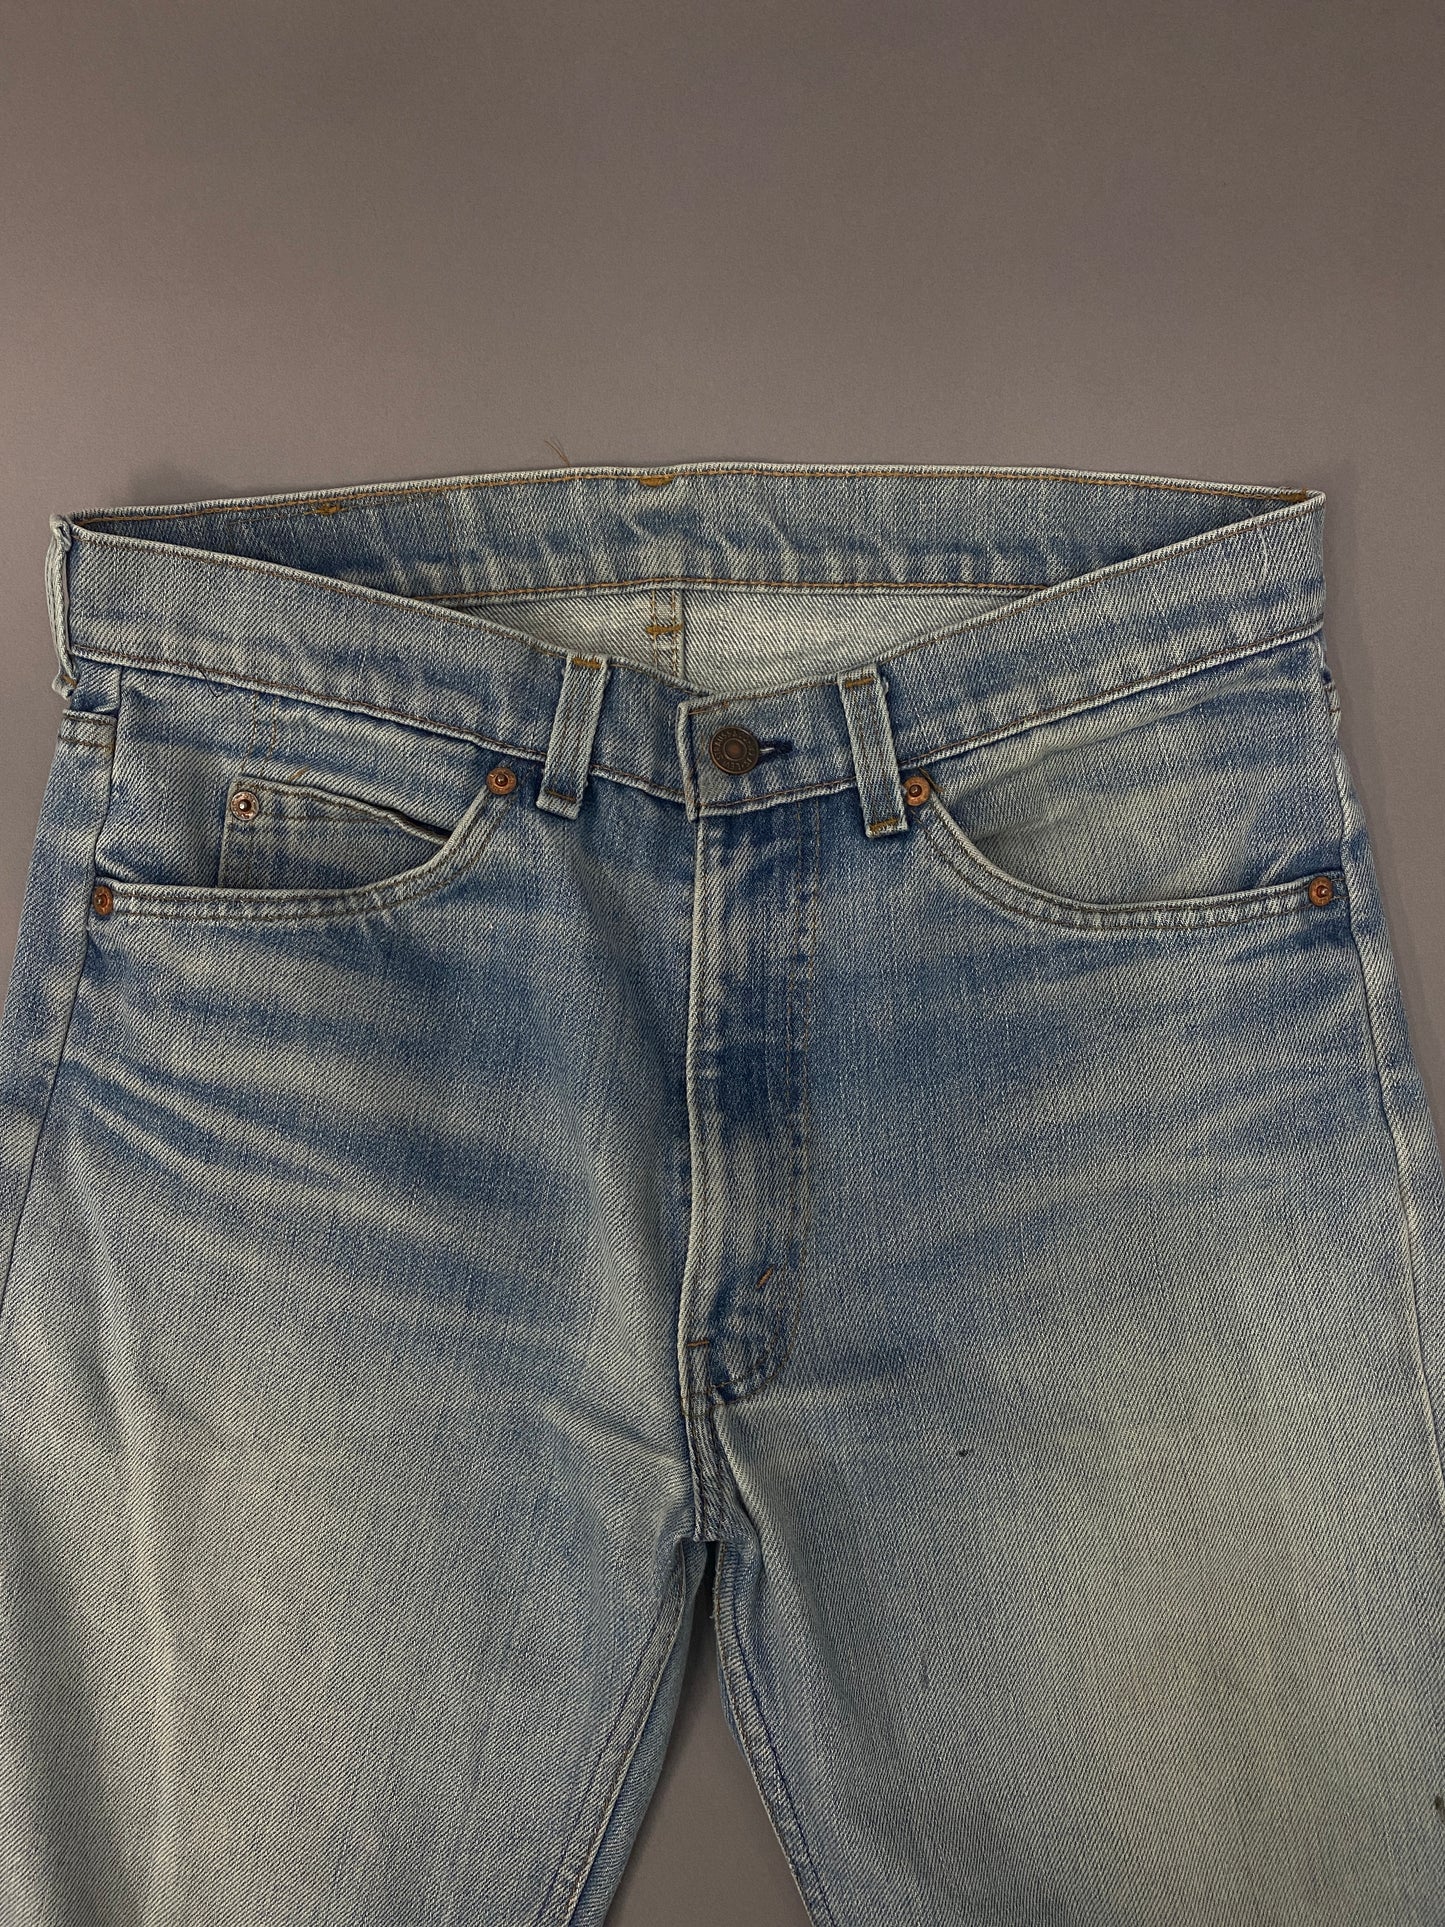 Levi's 505 Orange Tab Jeans - 32 x 36